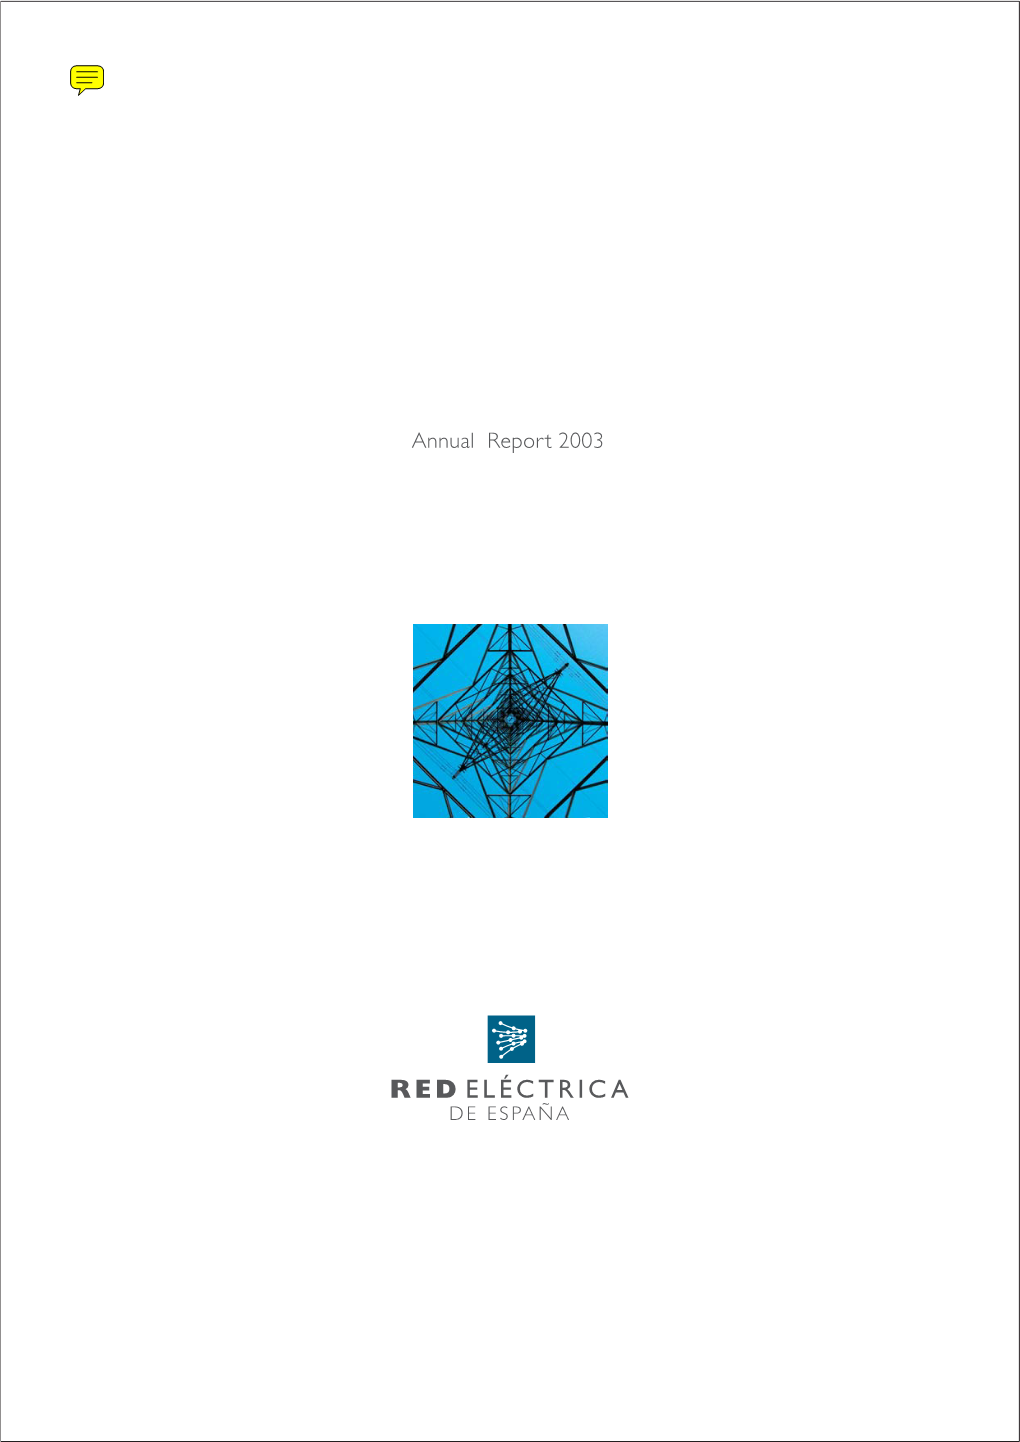 Annual Report of Red Electrica De España 2003